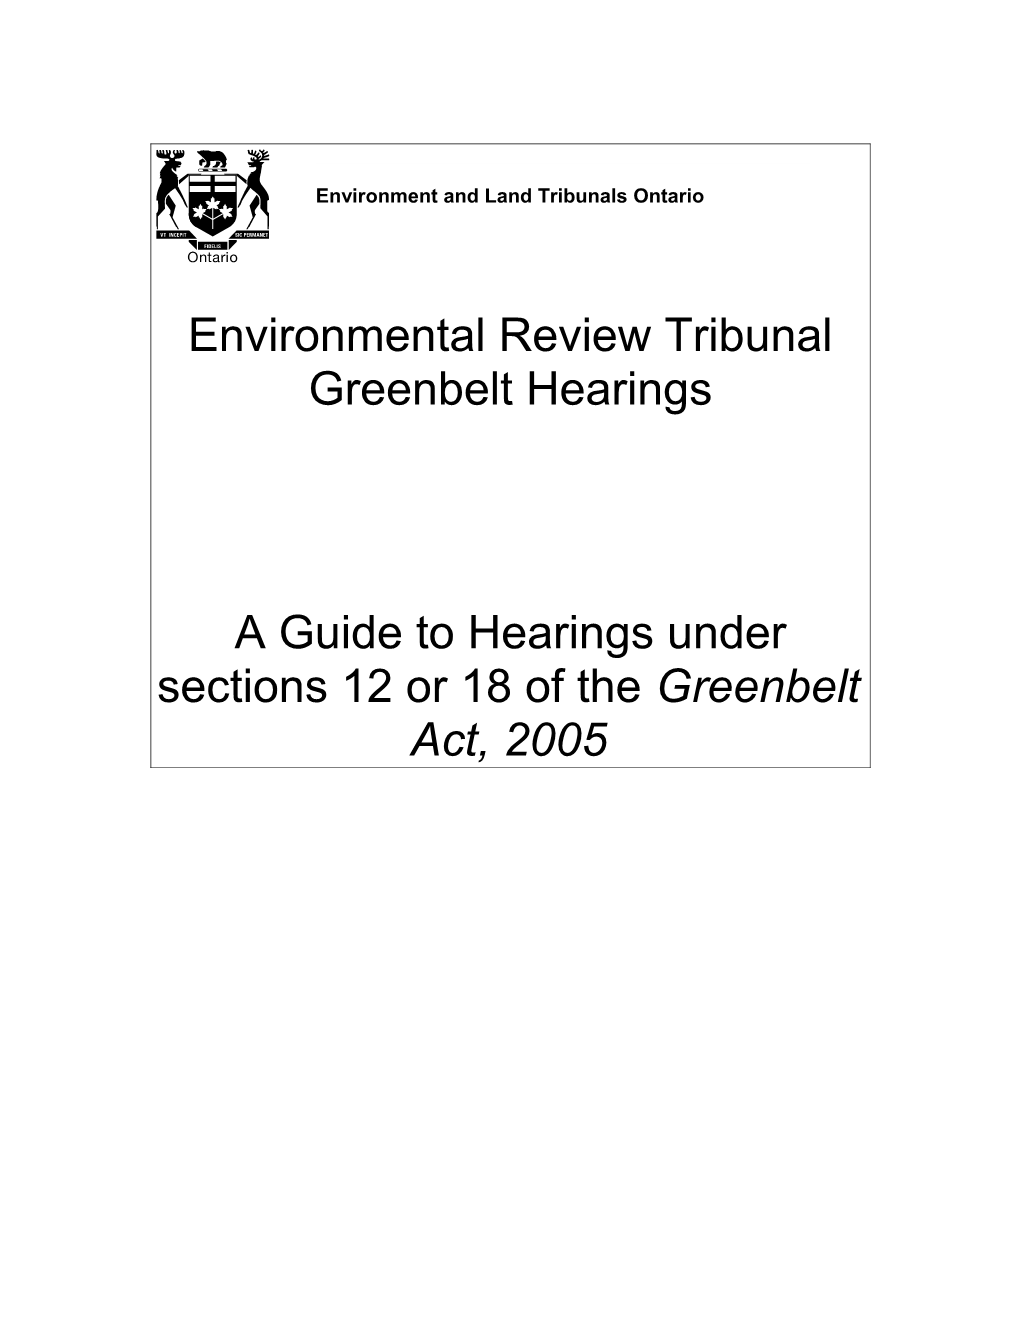 Environmental Review Tribunalgreenbelt Hearings